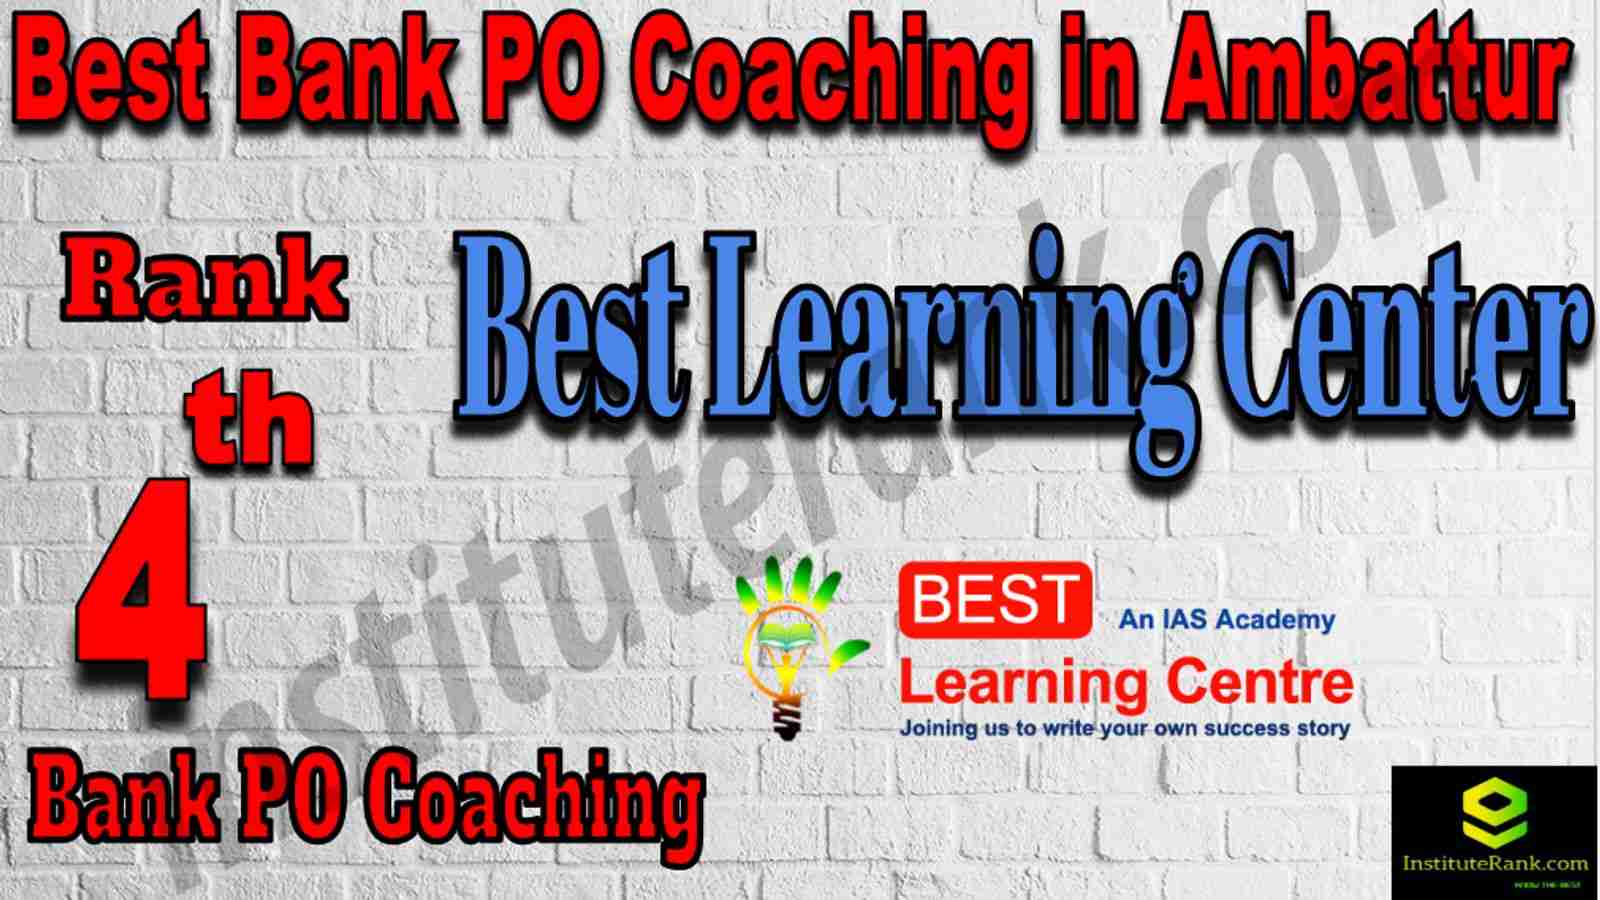 4th Best Bank PO Coaching in Ambattur